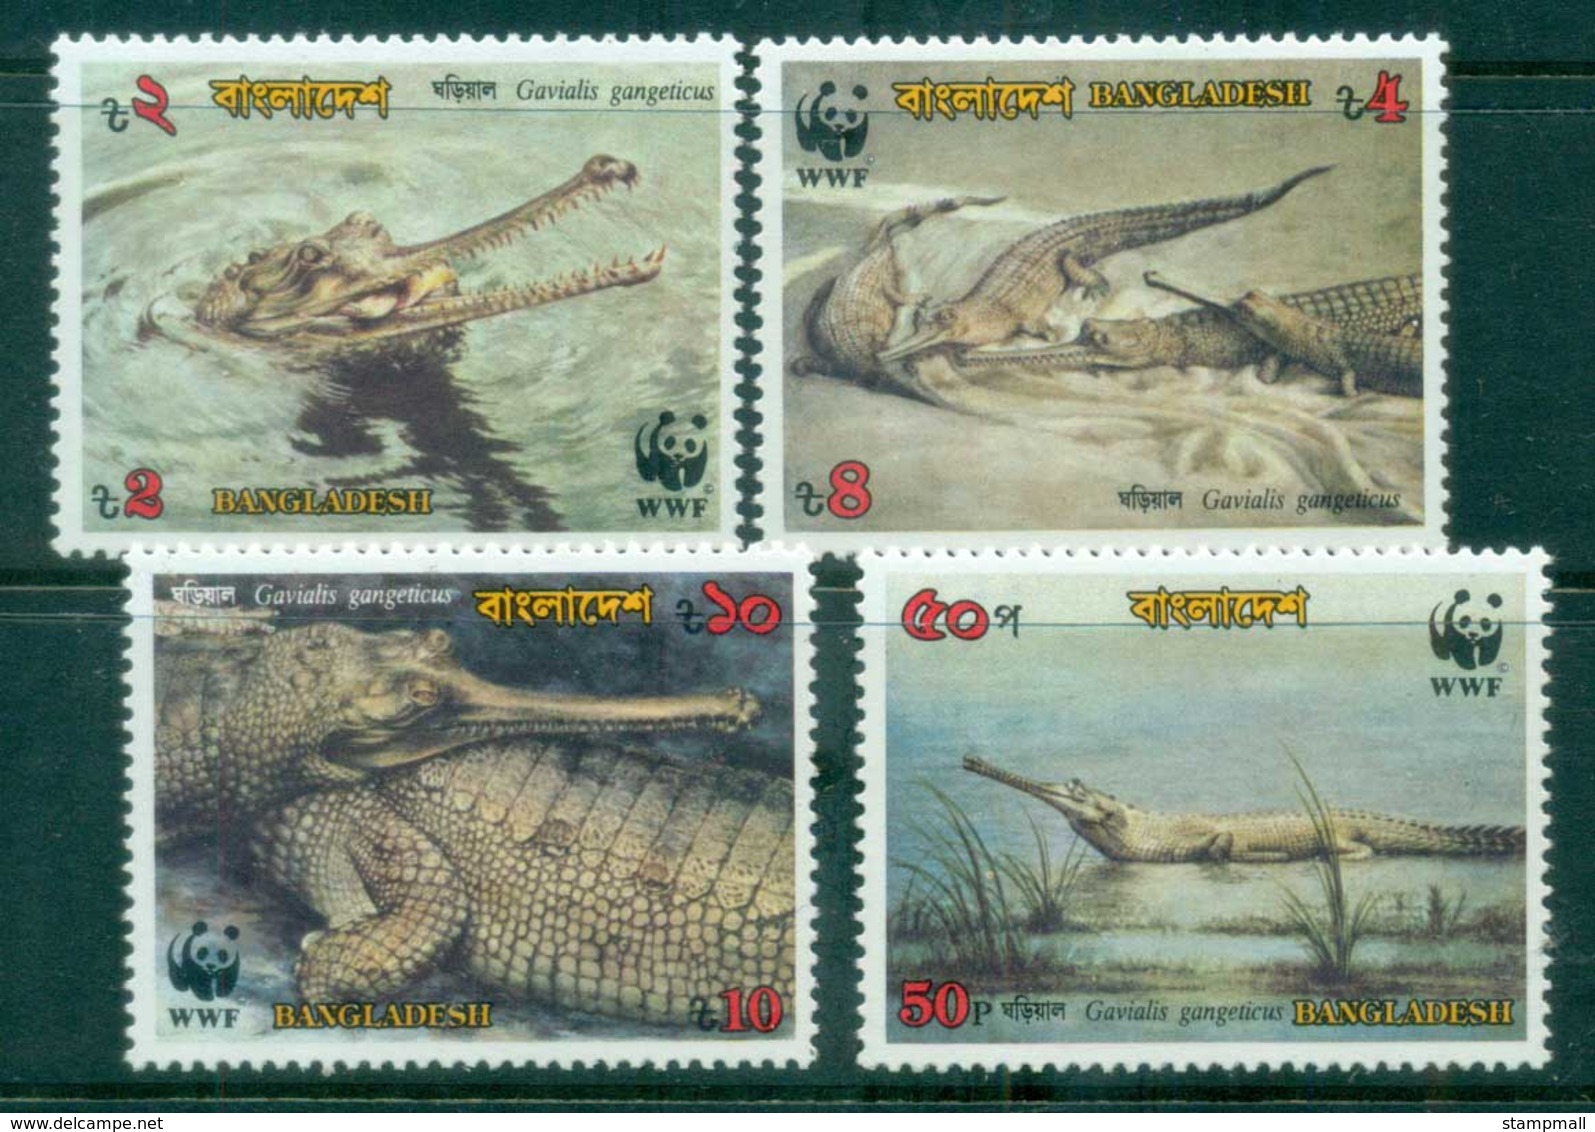 Bangladesh 1990 WWF Gharial MUH Lot76140 - Bangladesh